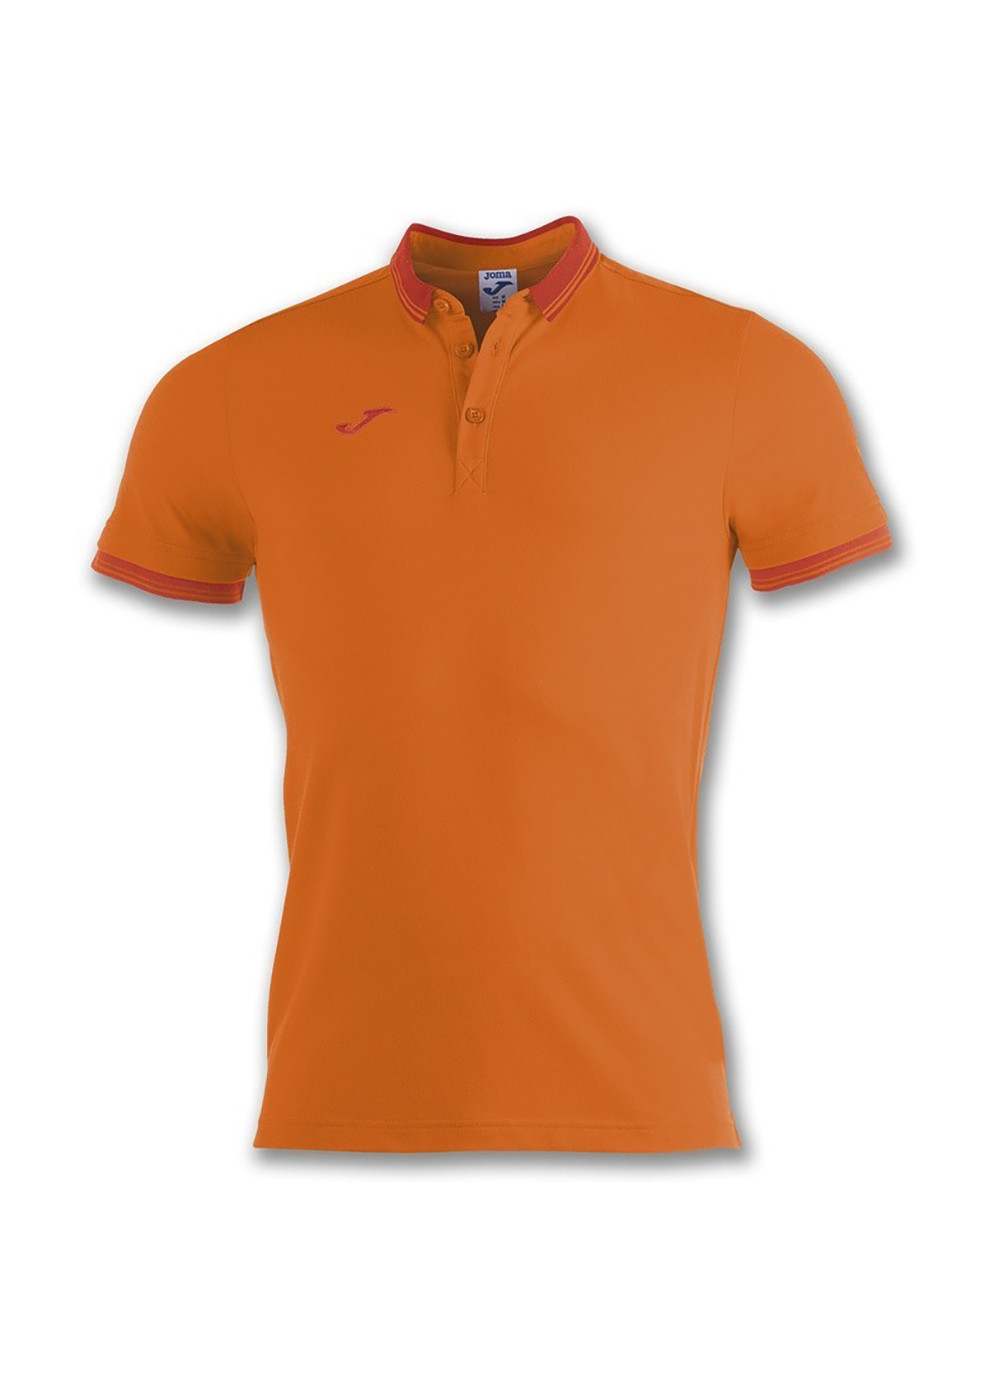 Оранжевая футболка-поло polo shirt bali ii orange s/s оранжевый для мужчин Joma